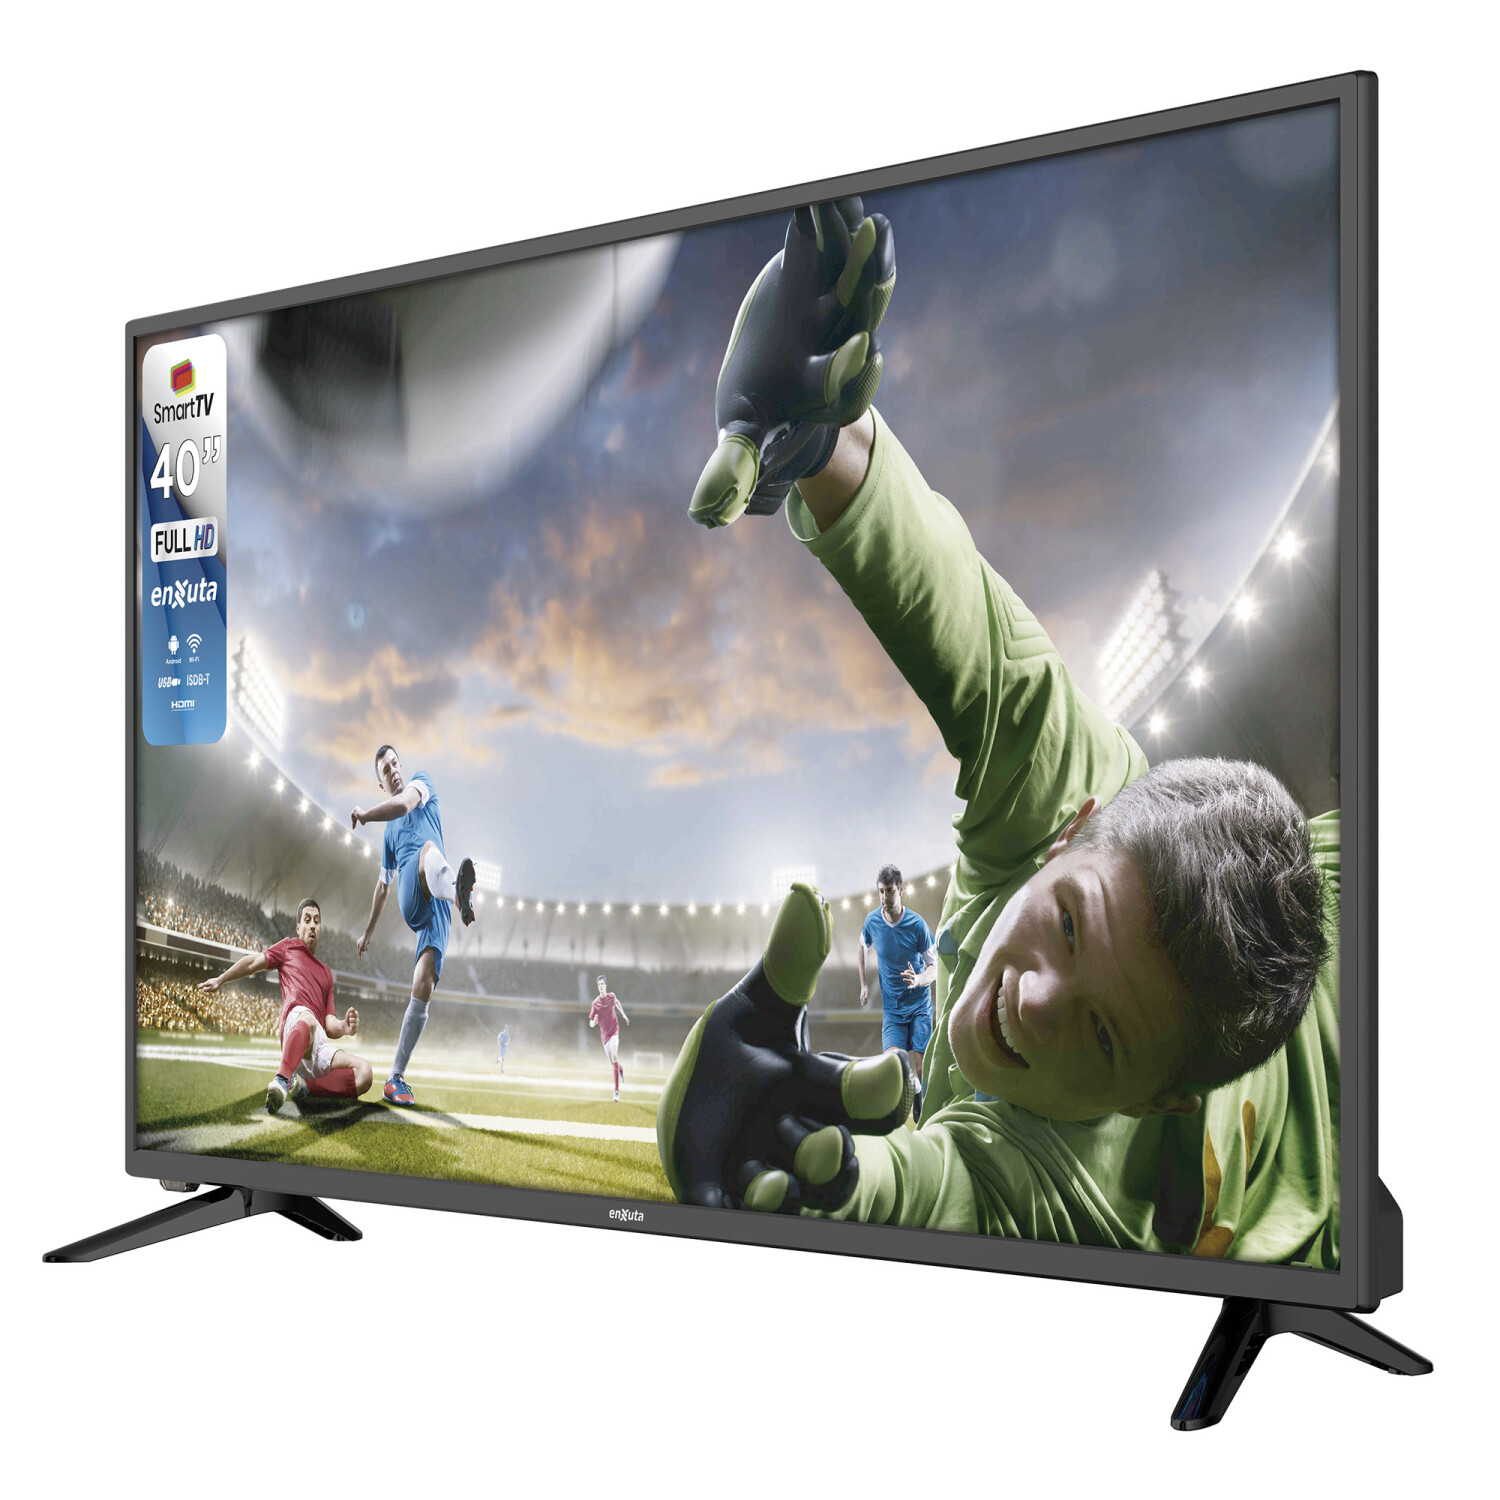 Oficiales Usual calidad Tv Led Smart Enxuta 40-pulgadas Ledenx1240sdf2ka — Divino